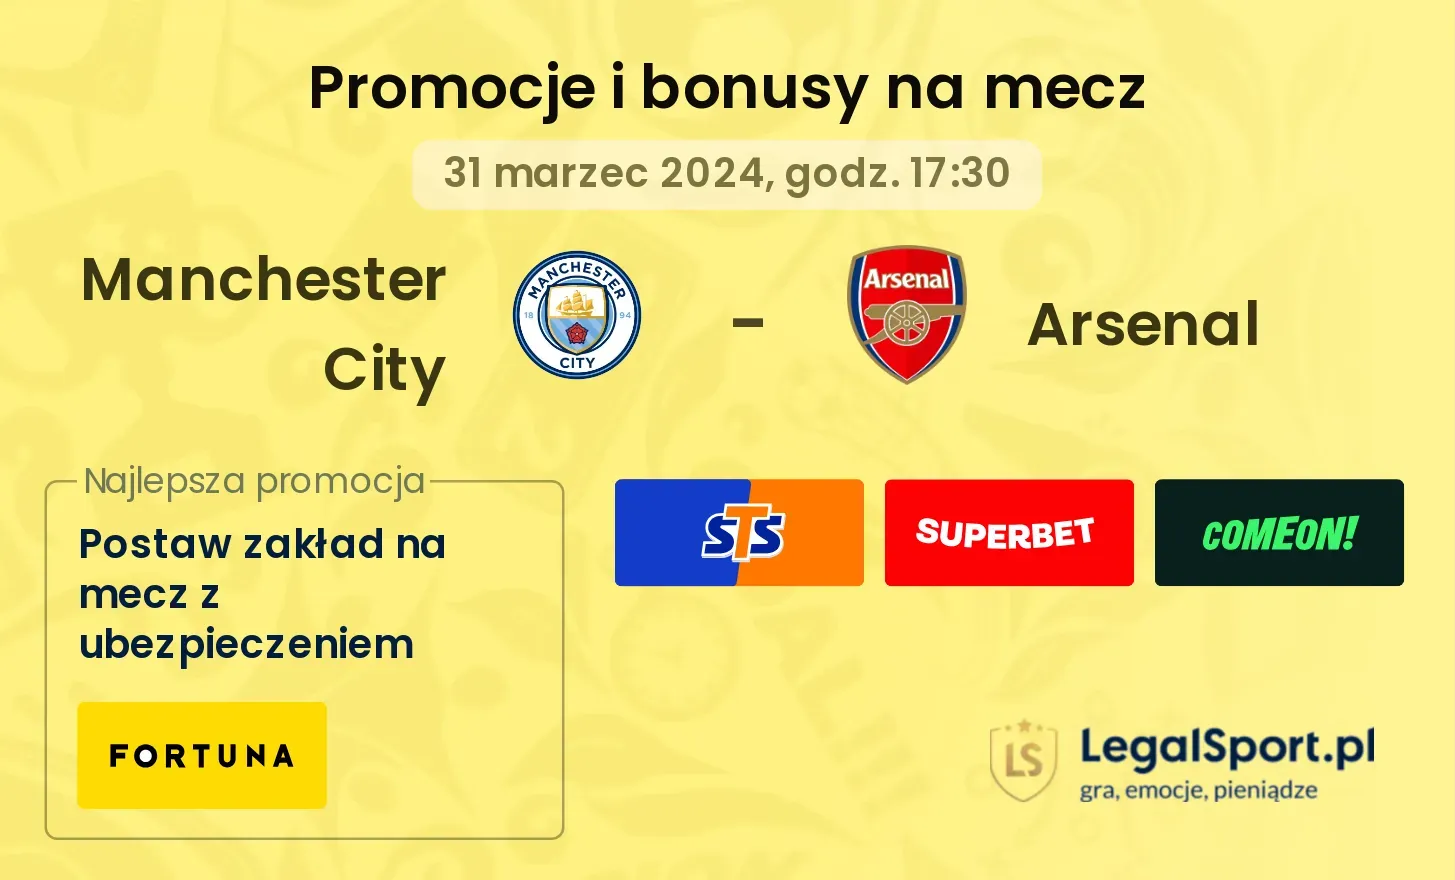 Manchester City - Arsenal promocje bonusy na mecz